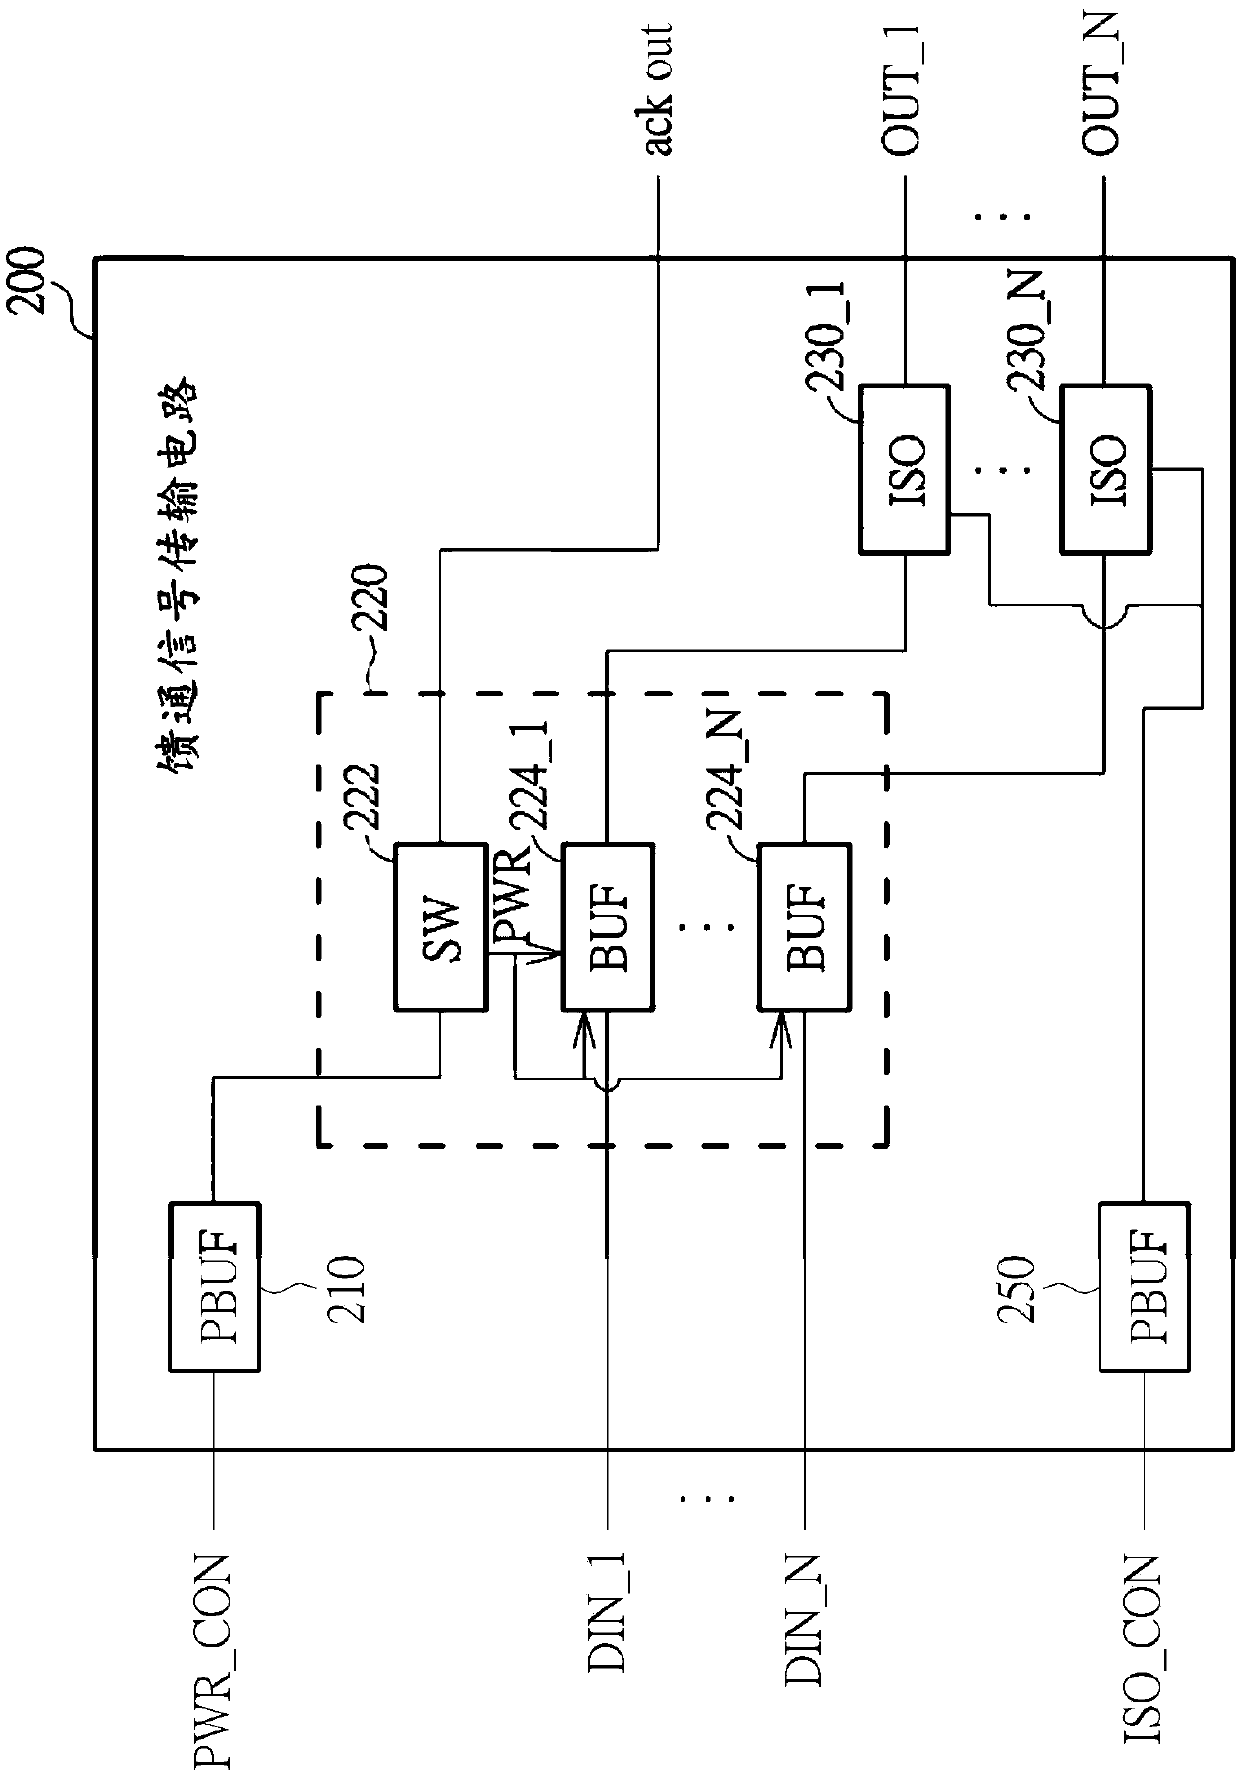 Feedthrough signal transmission device/method and related feedthrough signal transmission circuit